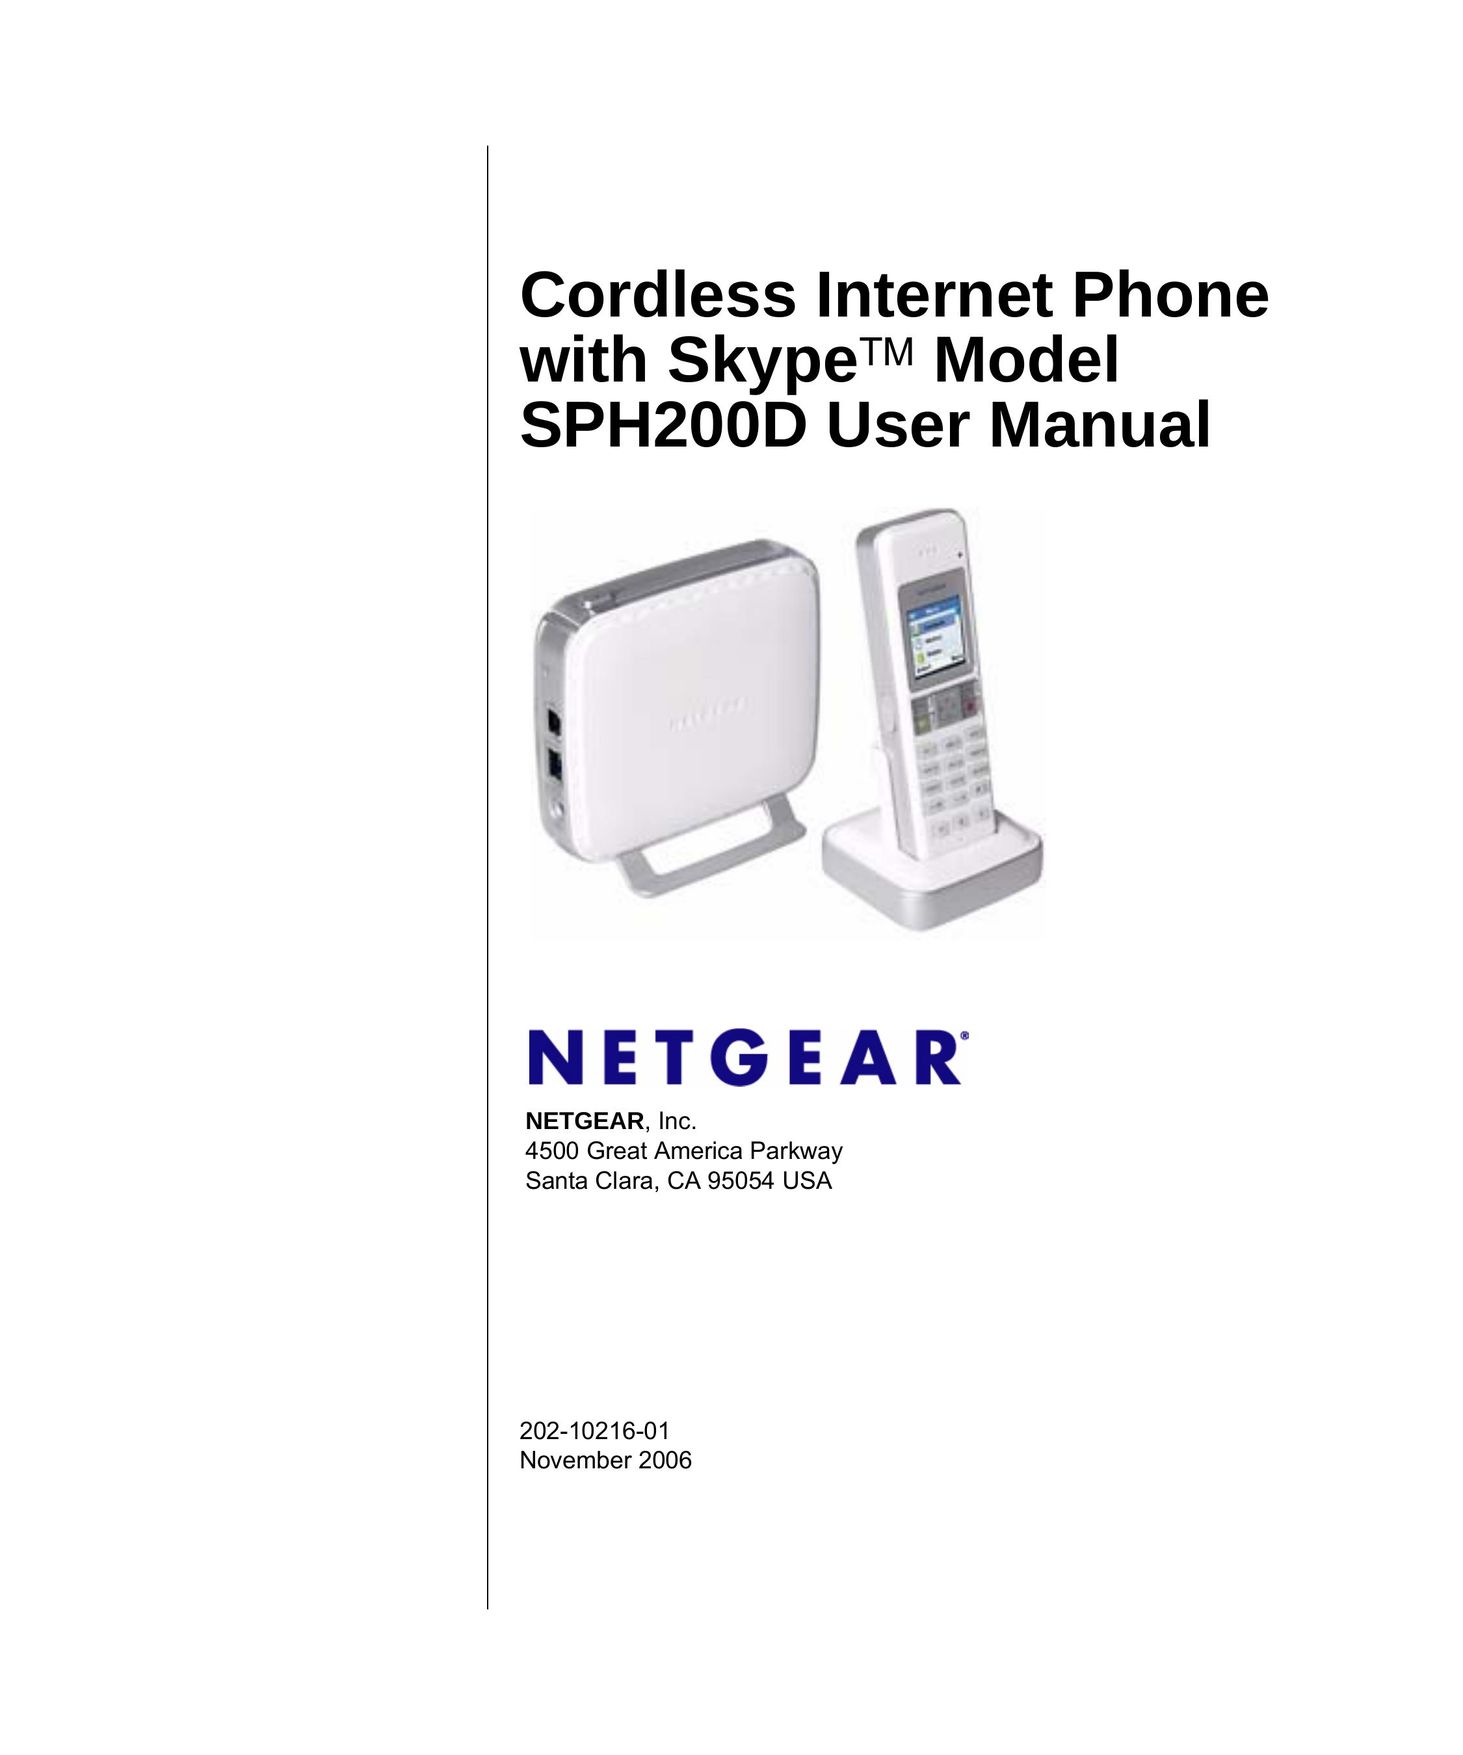 NETGEAR SPH200D Cordless Telephone User Manual